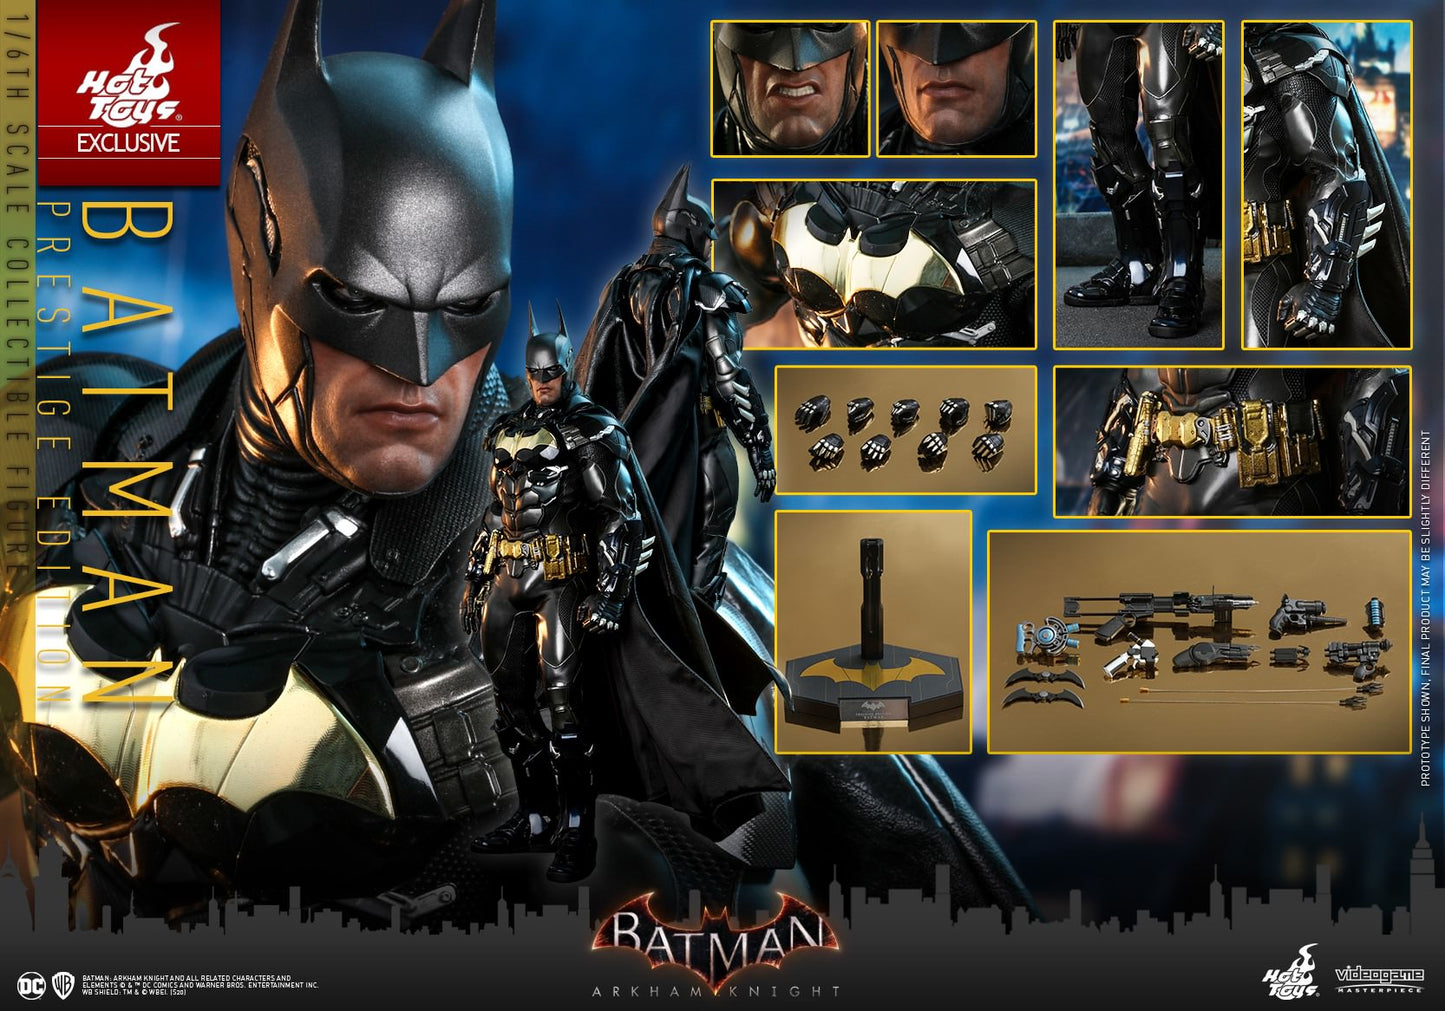 Batman Prestige Exclusive 1/6 - Batman: Arkham Knight Hot Toys